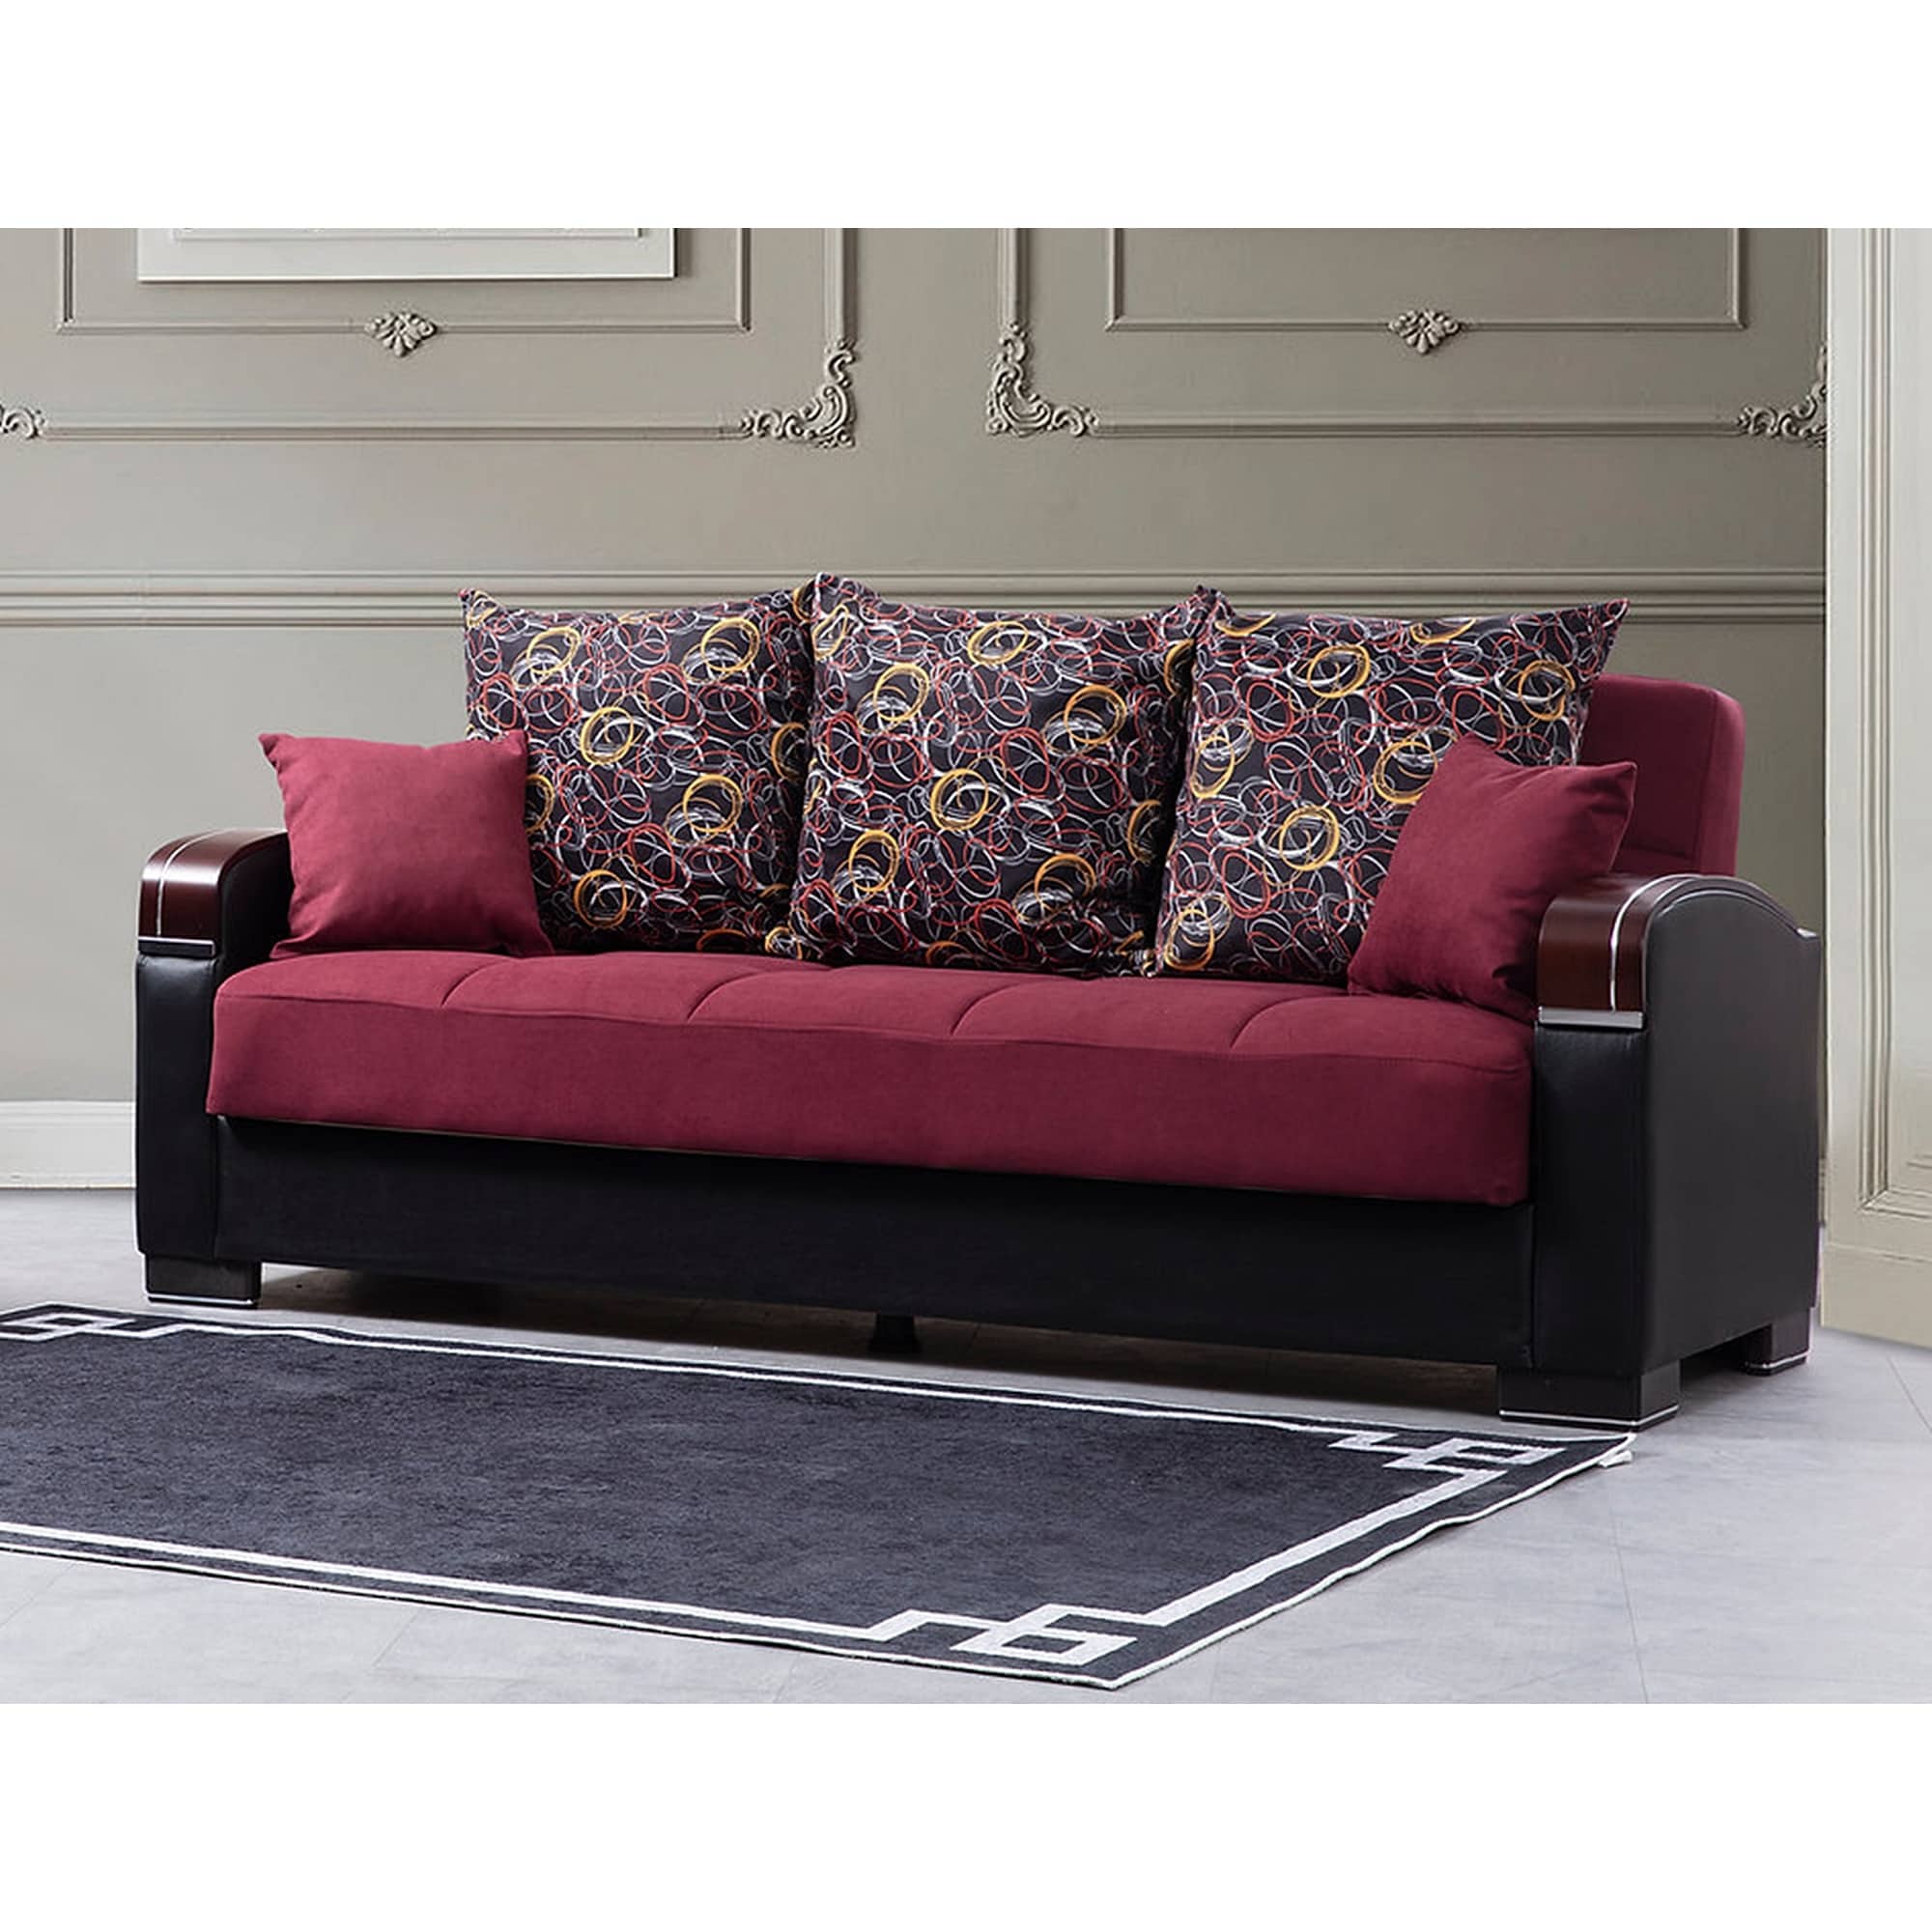 Tulsa Burgundy Fabric-Leather Upholstered Sleeper Sofa with Storage - - 35180598